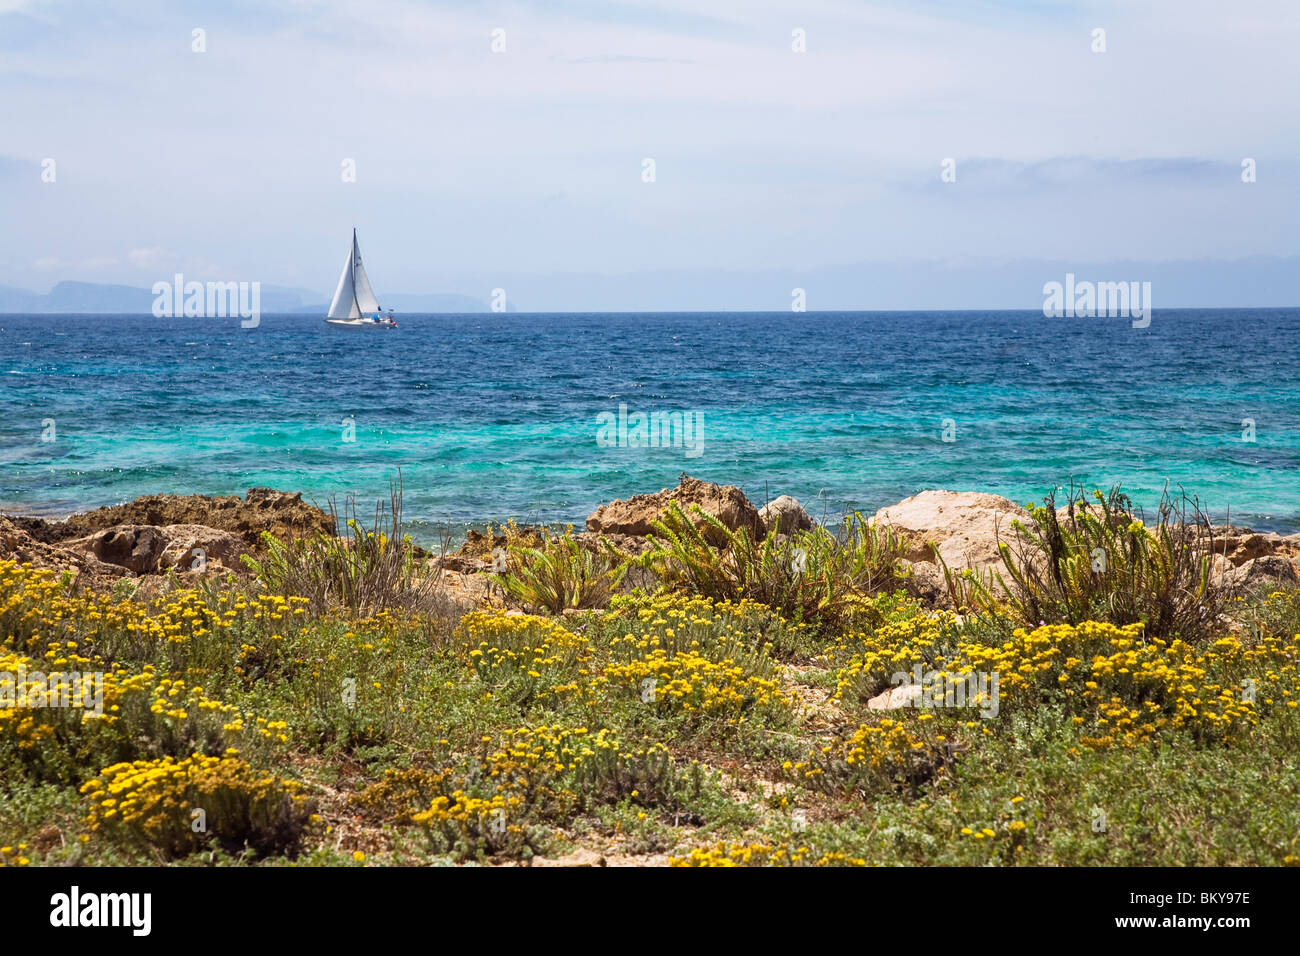 Coast area with flowers under clouded sky, Platja d'es Caragol, Mallorca, Balearic Islands, Mediterranean Sea, Spain, Europe Stock Photo